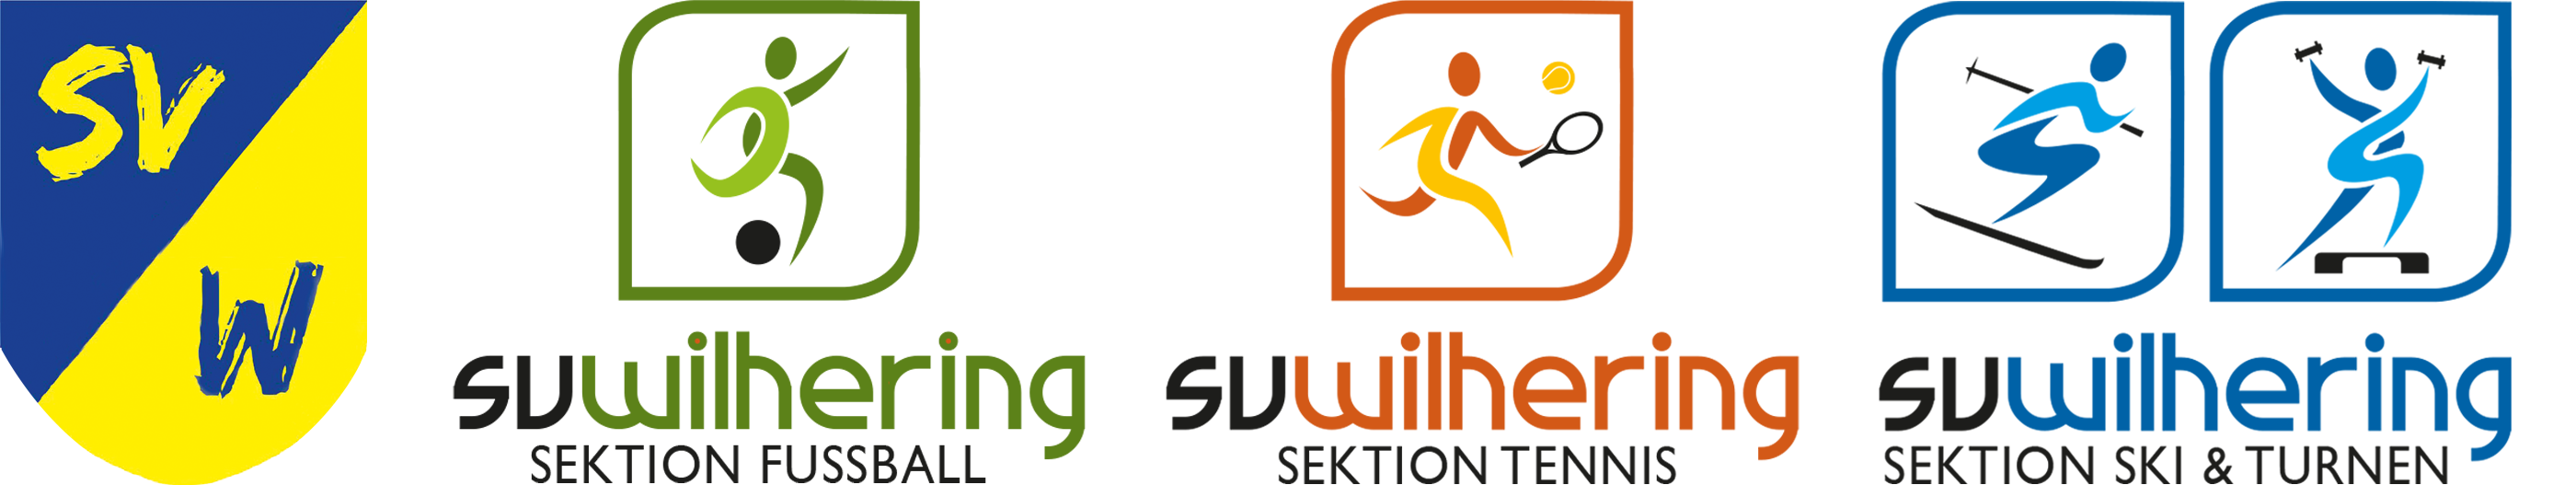 SV Wilhering